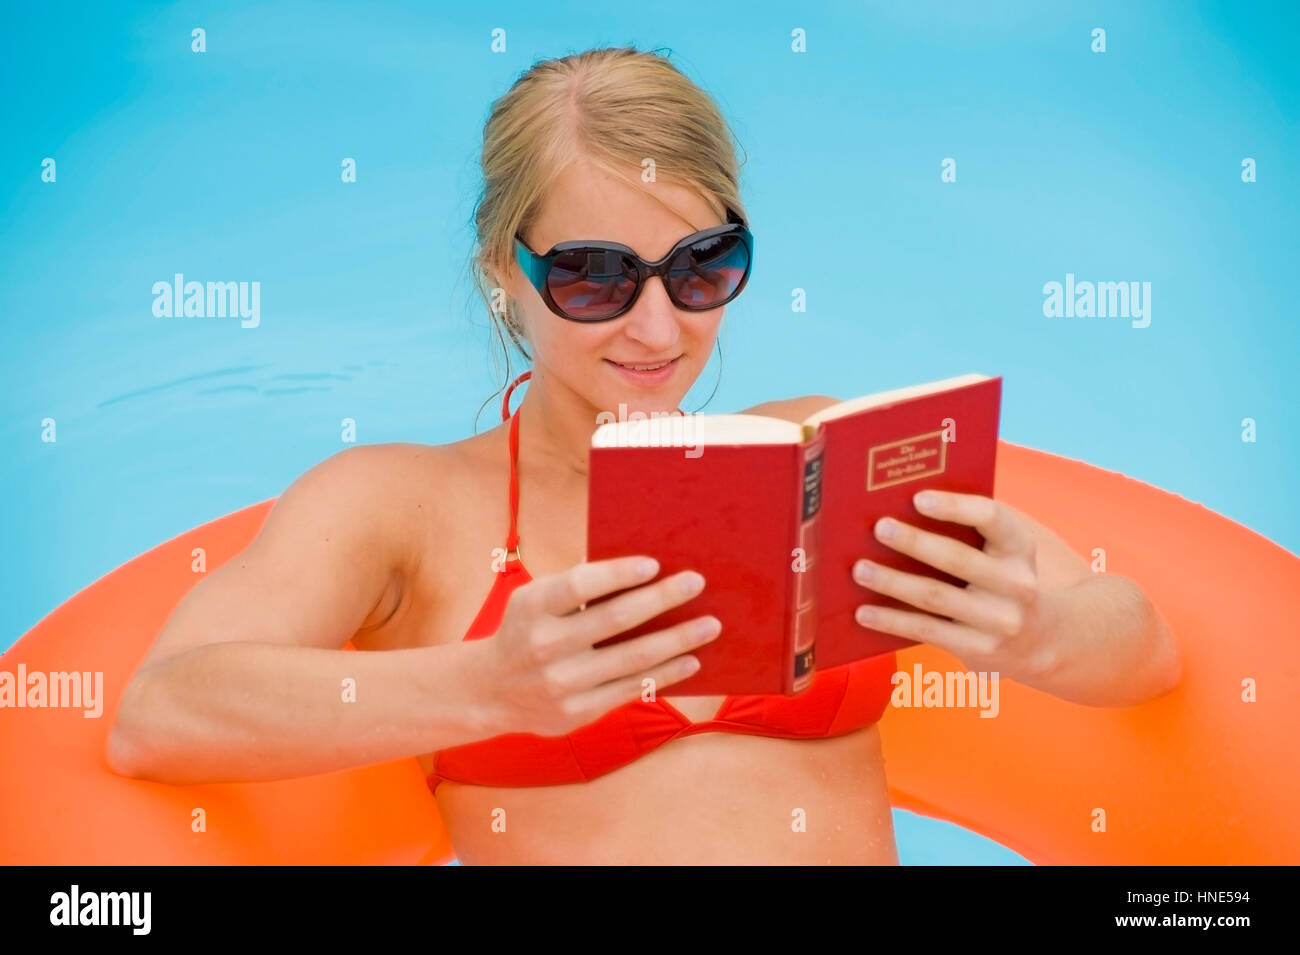 Model release, Junge Frau beim Lesen im Swimmingpool - woman reading in swimming pool Stock Photo